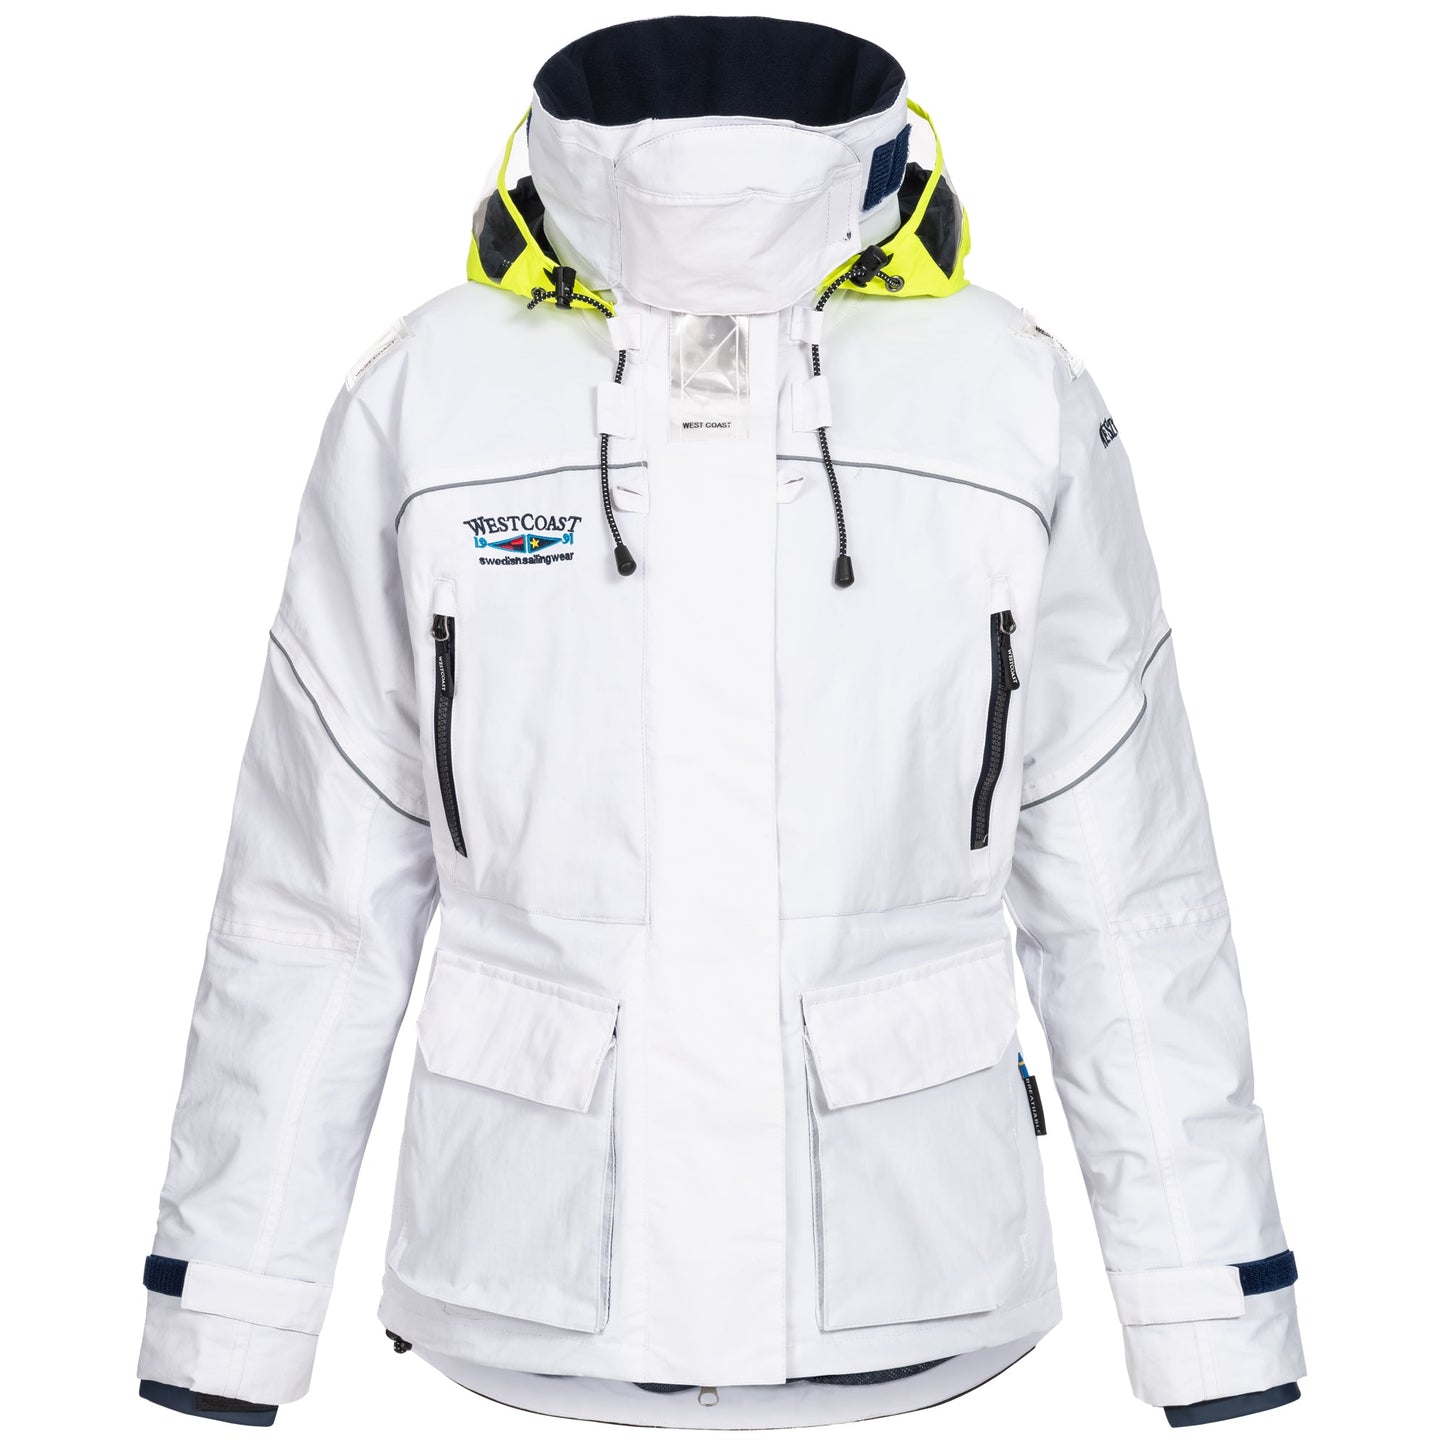 WESTCOAST Women's Foul Weather Gear COASTAL Jacket - WESTCOAST Swedish Sailingwear